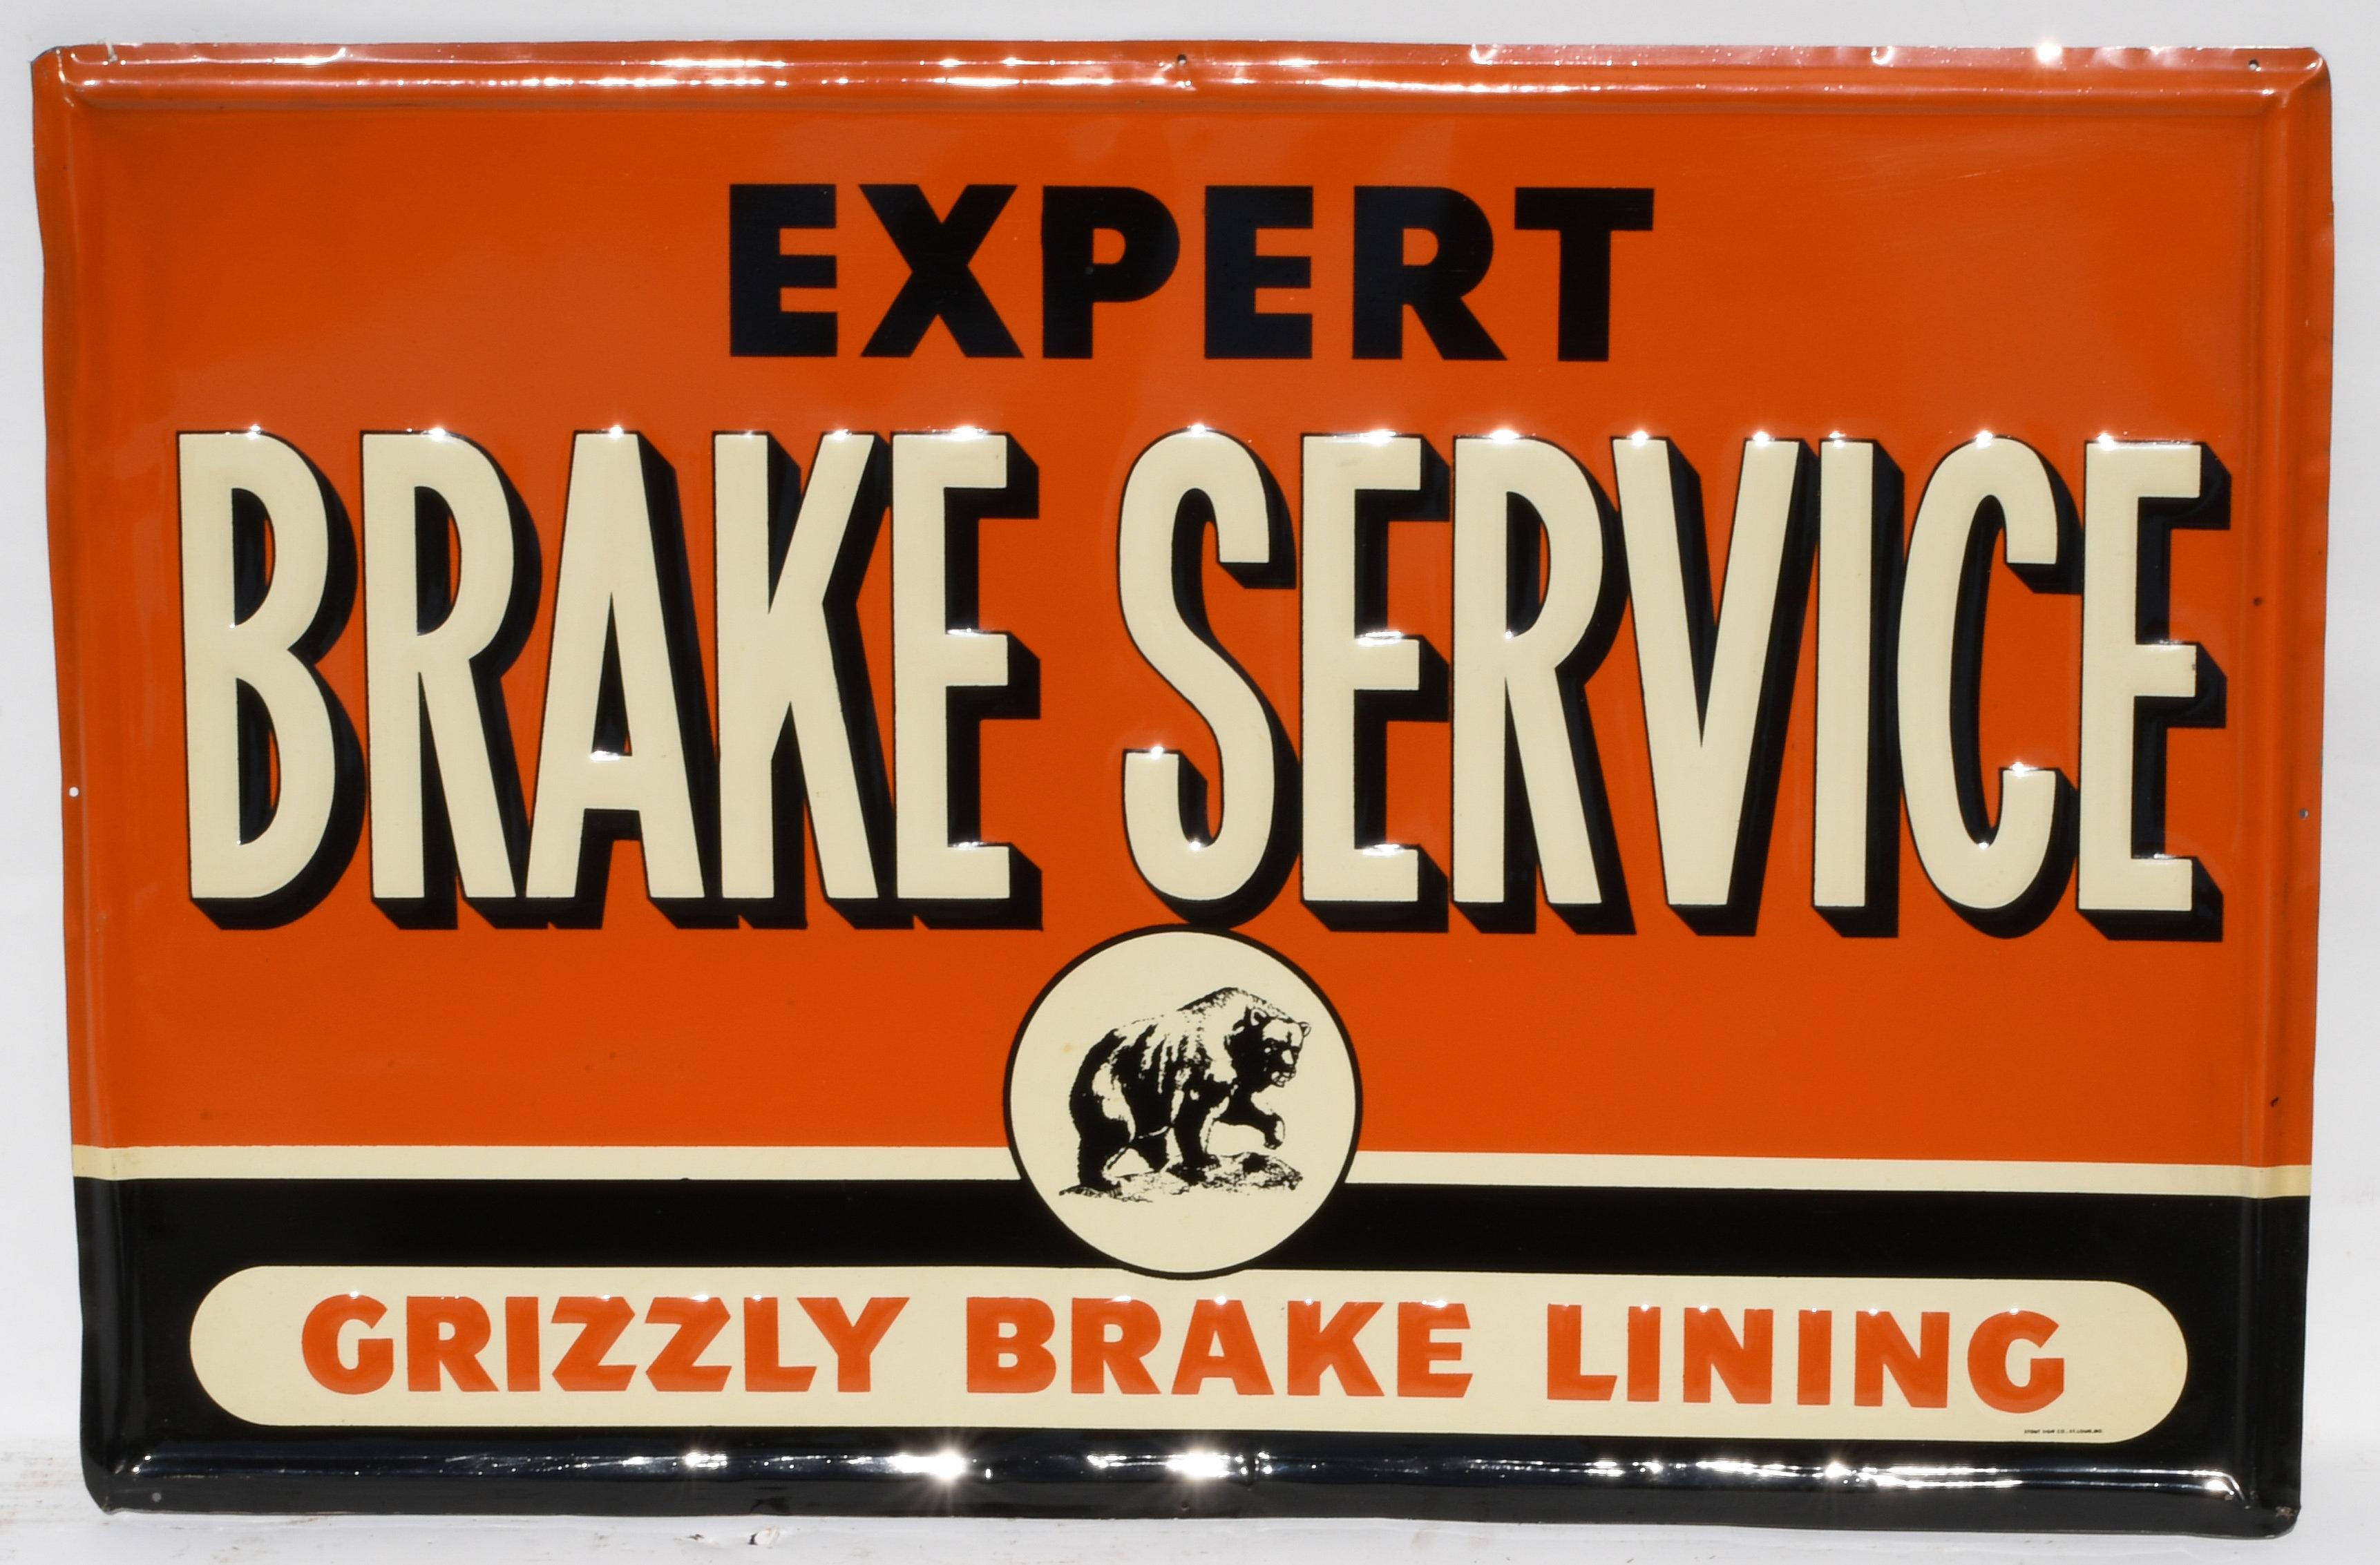 Grizzly Brake Lining Expert Brake Service Tin Sign